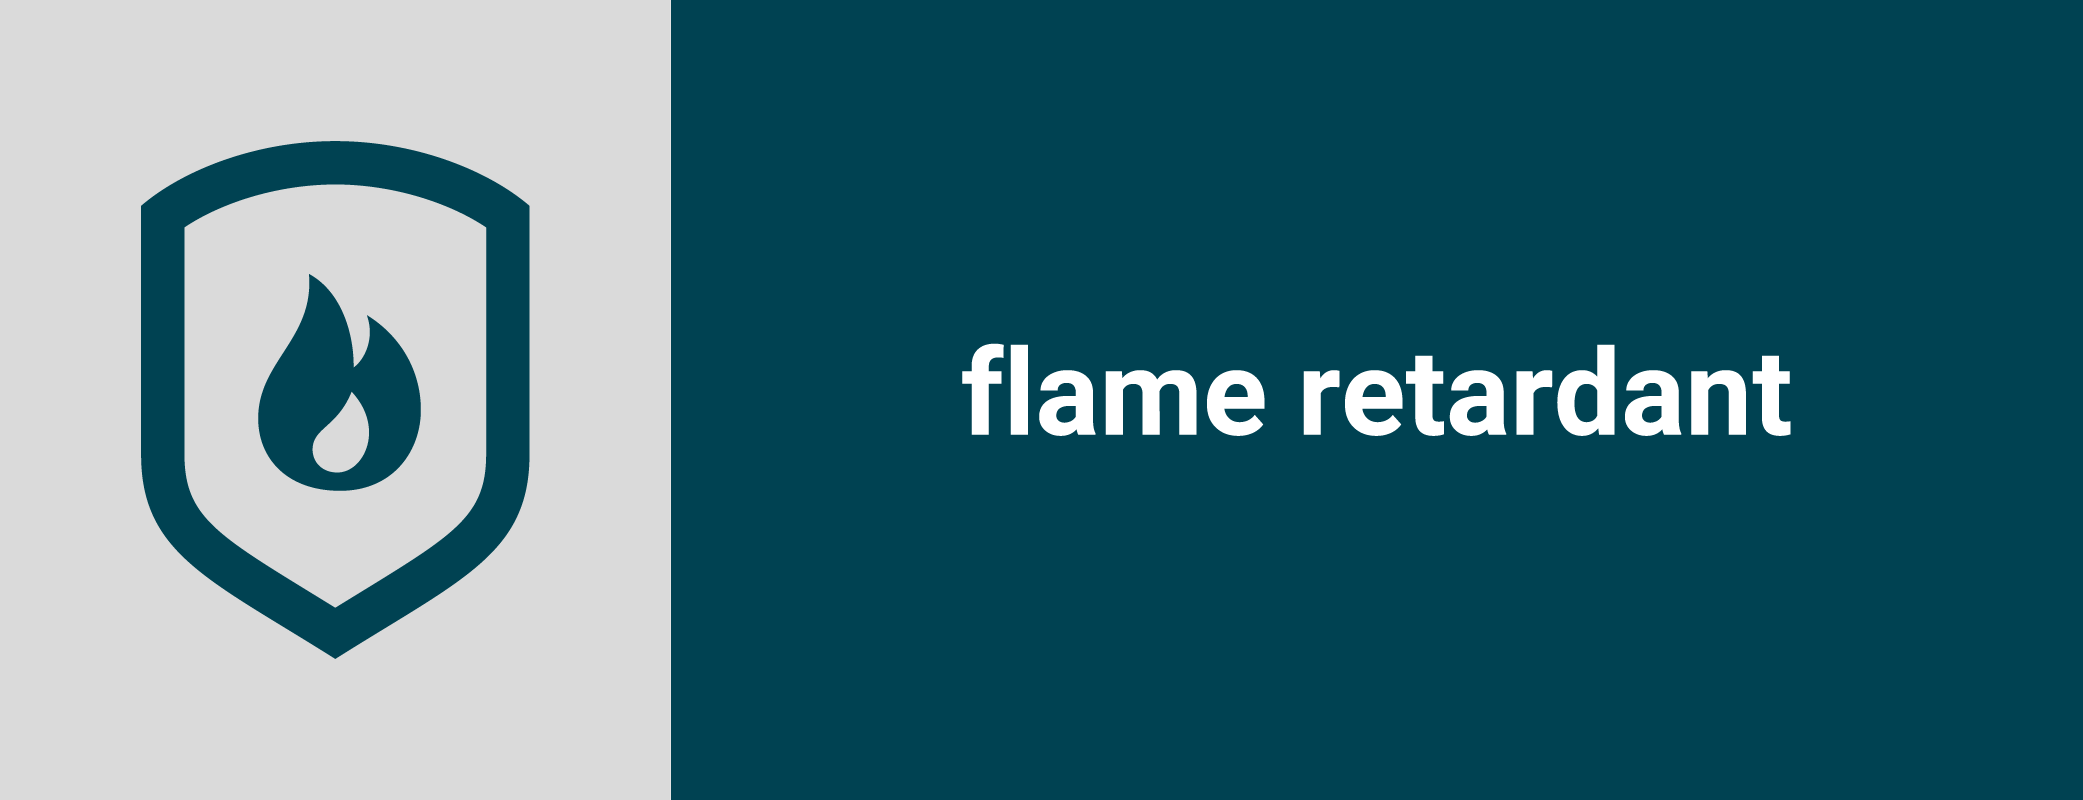 TFF_Icons_flame_retardant